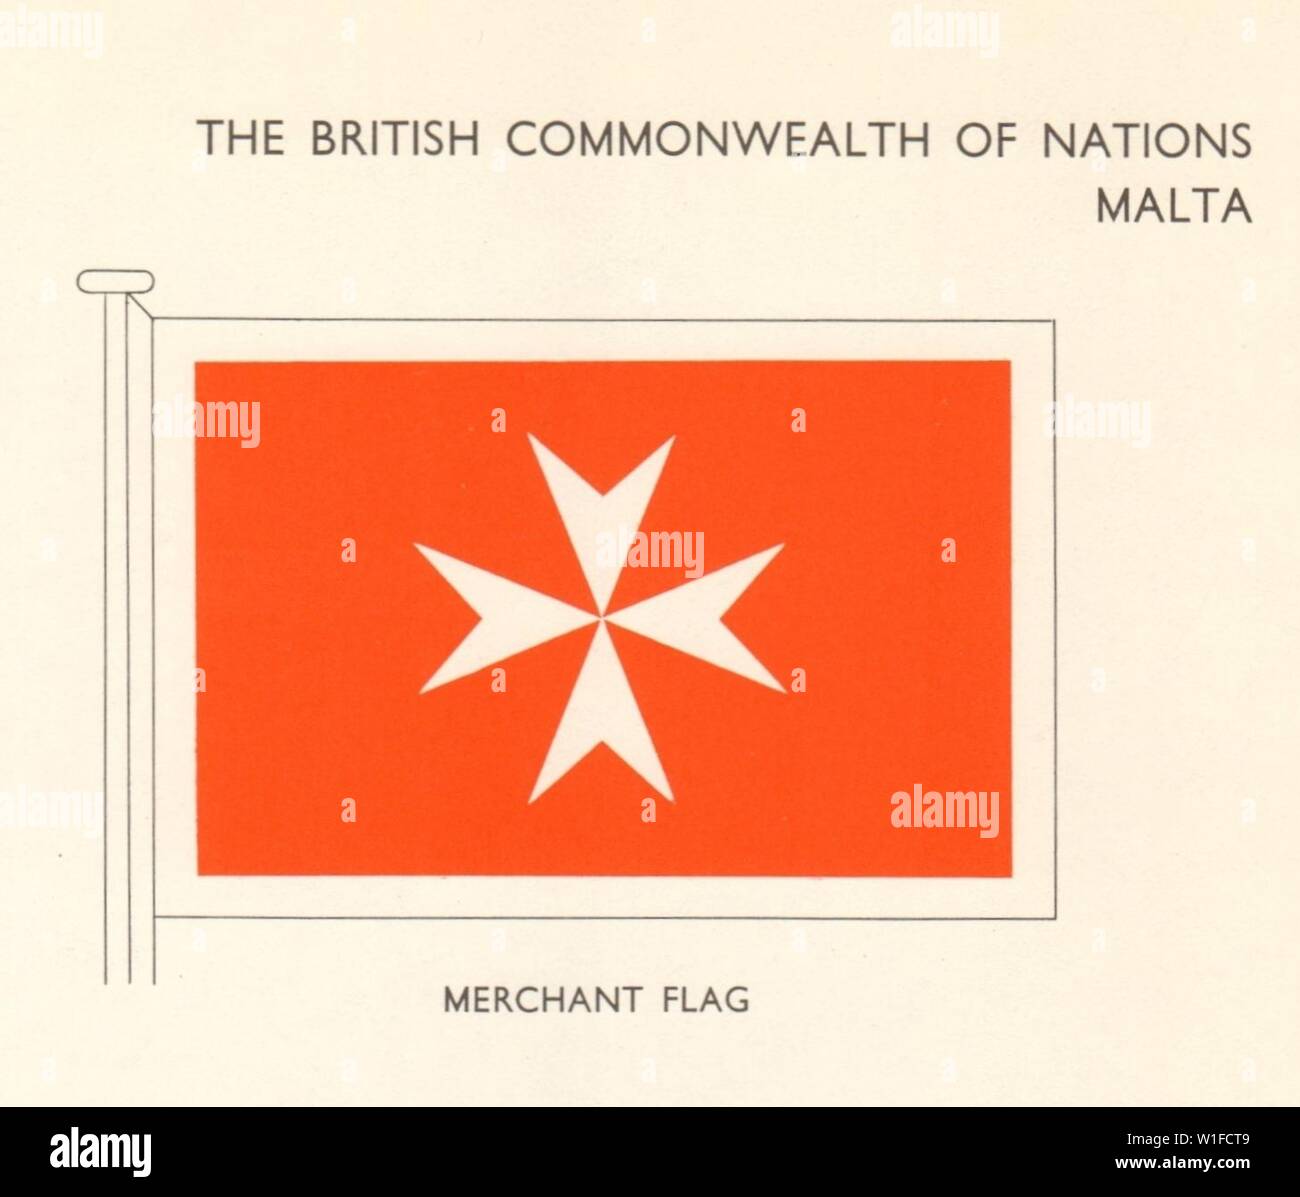 MALTA FLAGS. Merchant Flag 1968 alte vintage Bild drucken Stockfoto